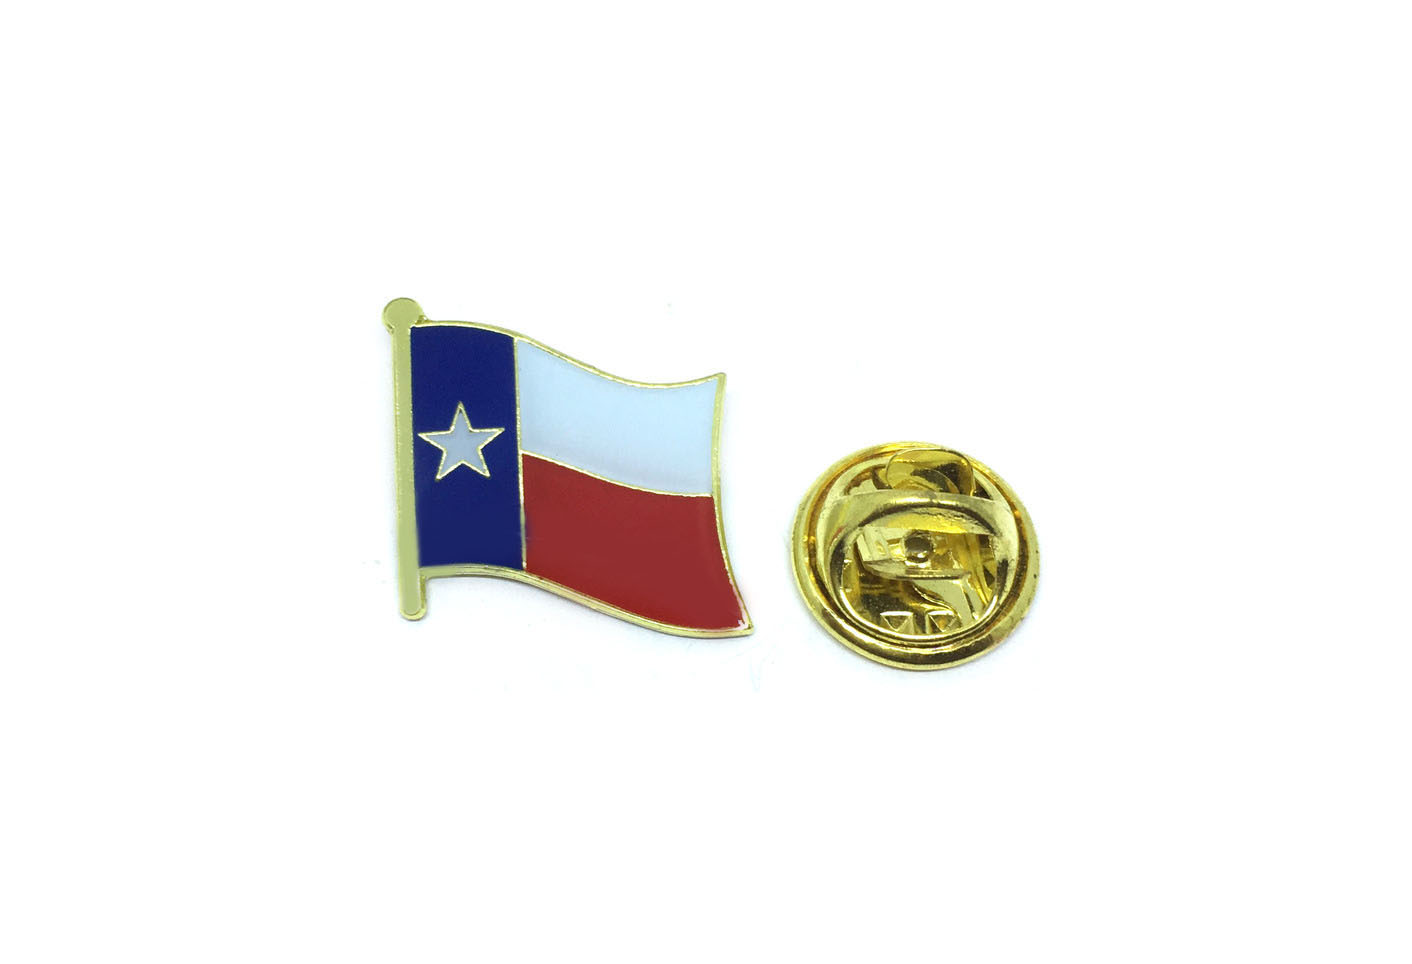 Texas Flag Pin